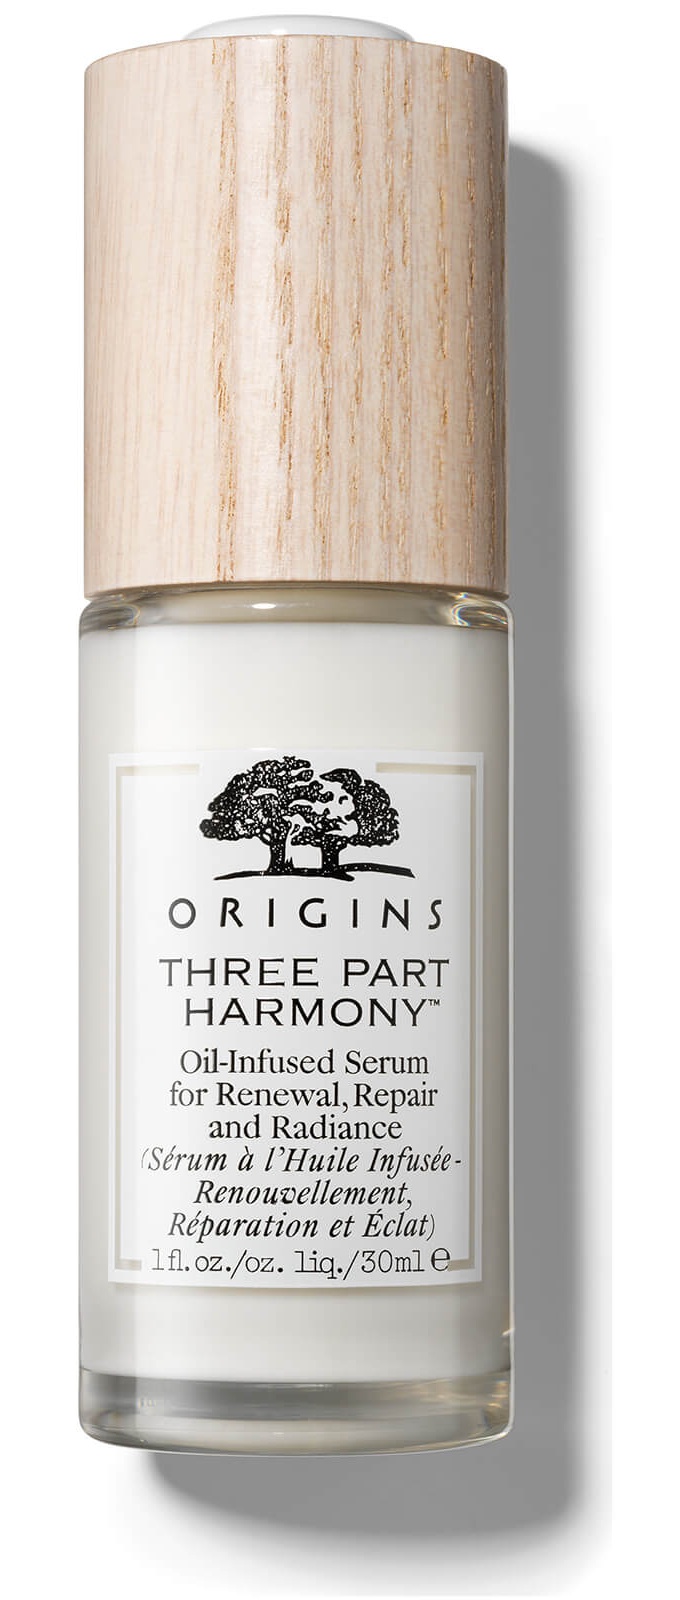 Origins Three Part Harmony™ Oil-Infused Serum for Renewal, Repair and Radiance